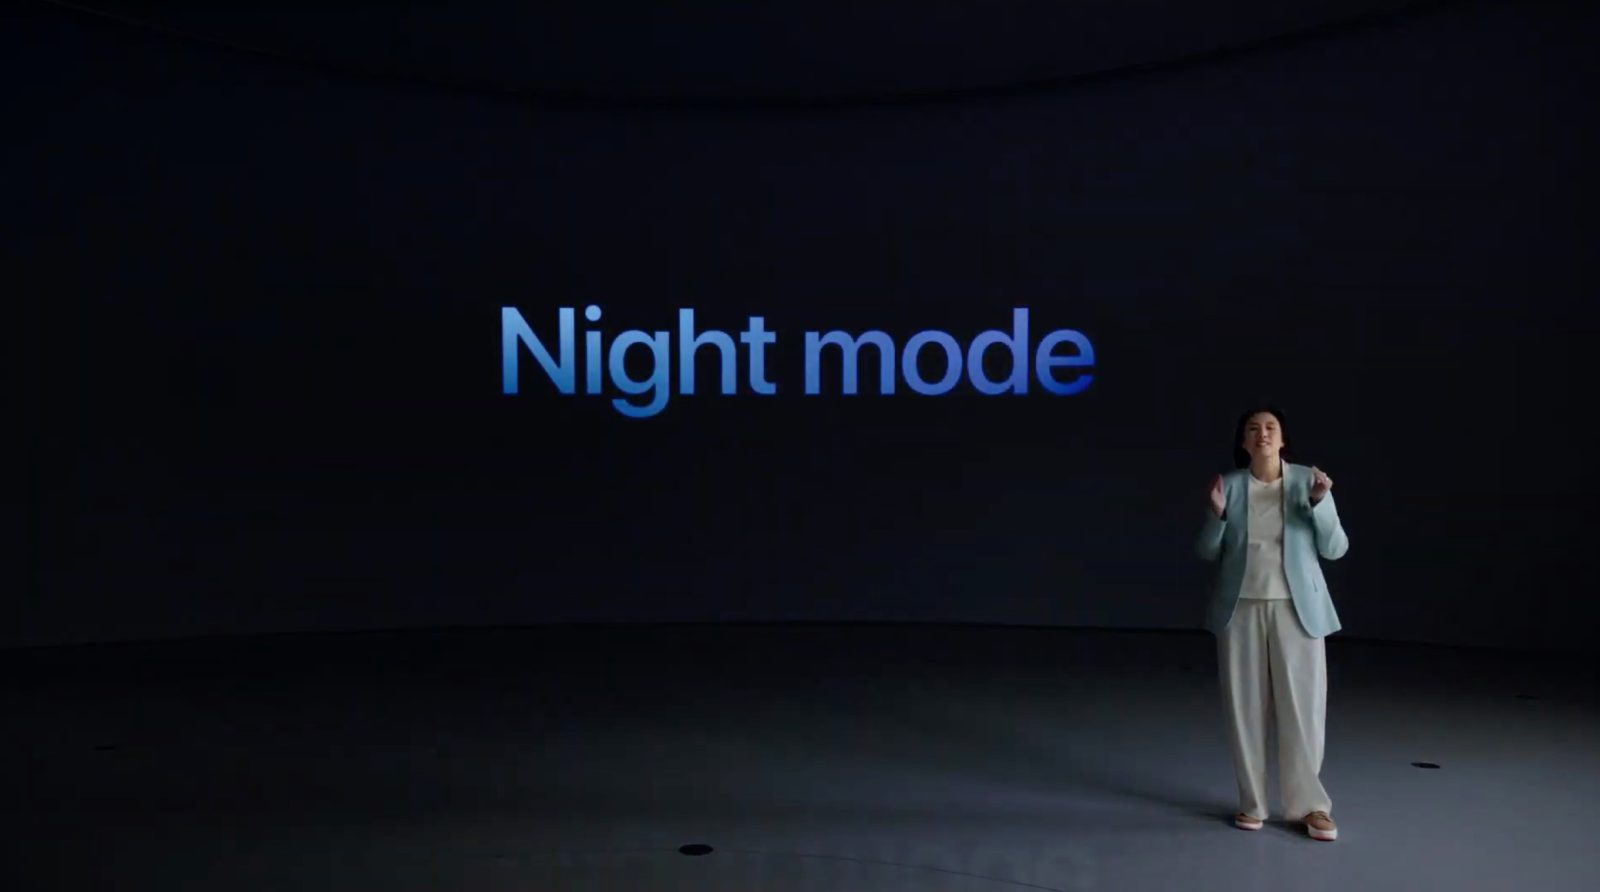 Take Night mode selfies iPhone 12